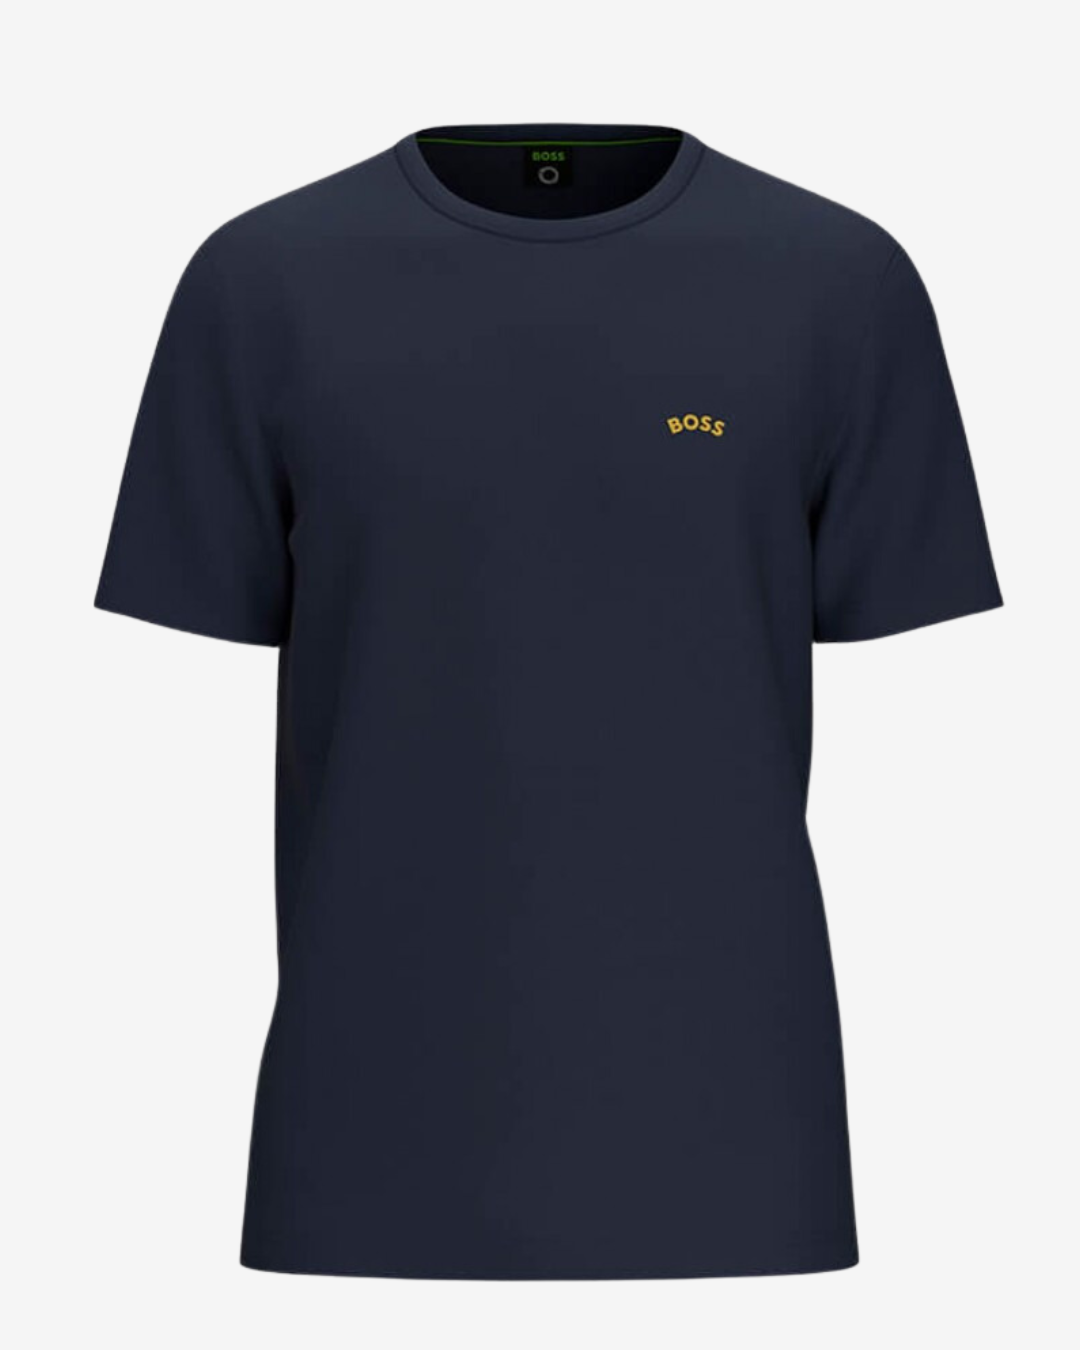 Se Hugo Boss Curved logo t-shirt - Navy / Guld - Str. XXL - Modish.dk hos Modish.dk